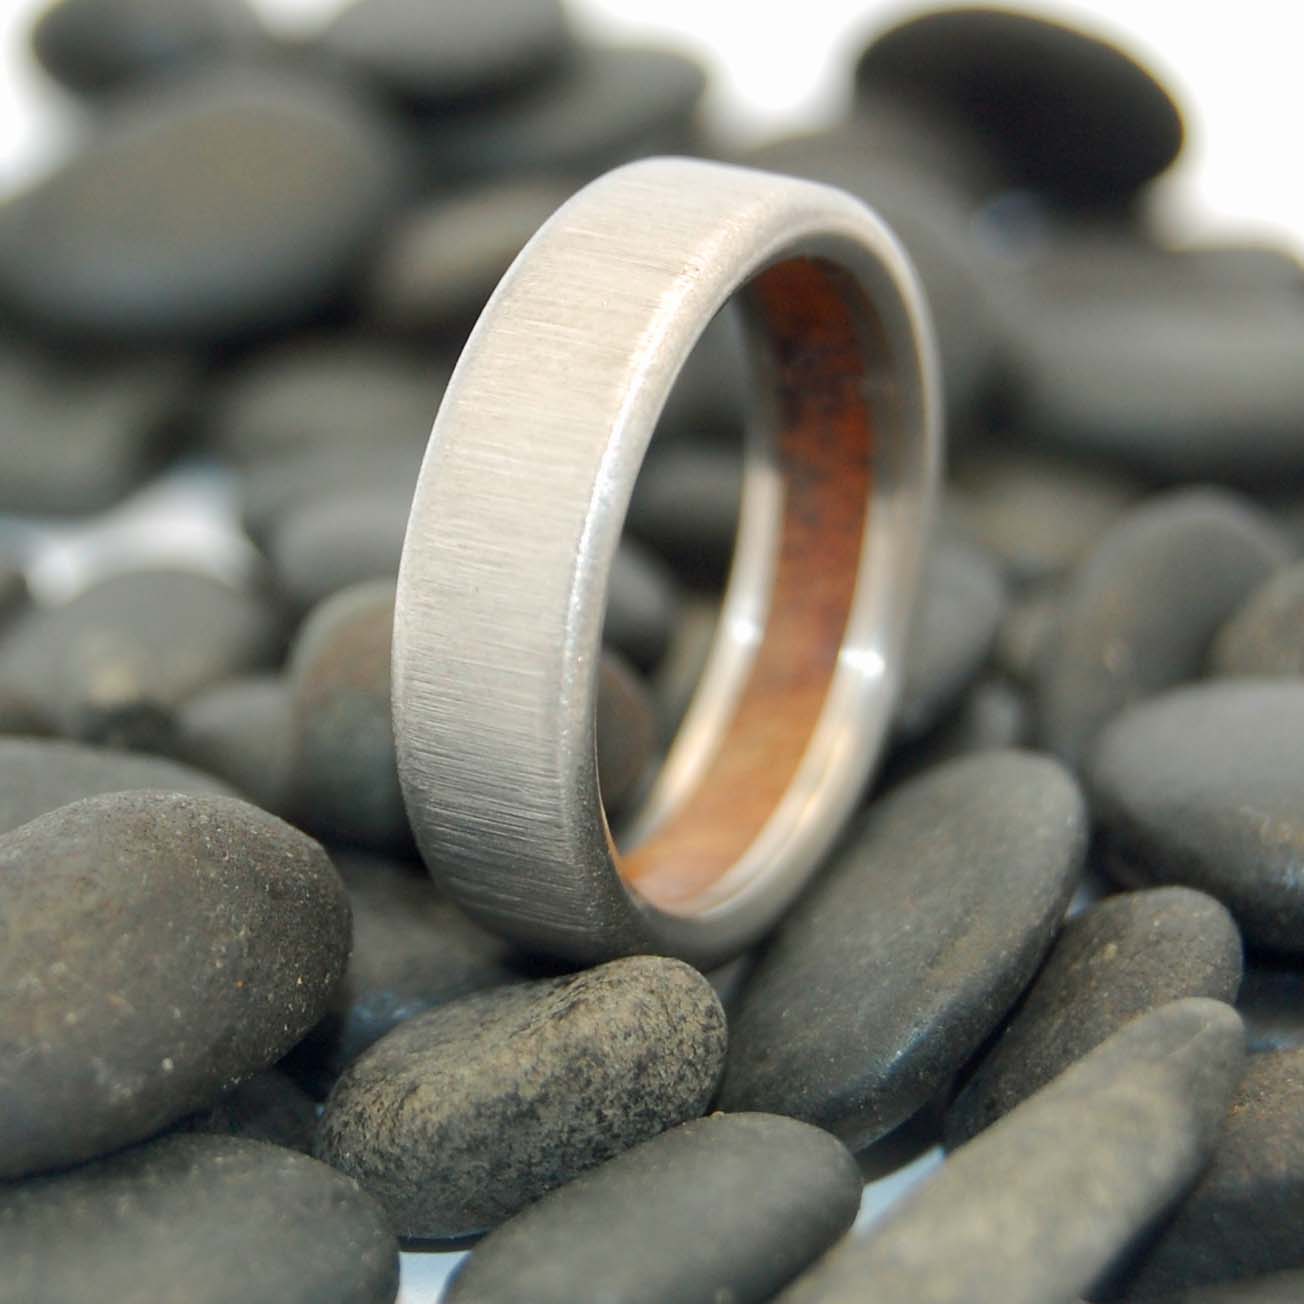 HUMBLE KOA | Hawaiian Koa Wood & Titanium - Unique Wedding Rings - Titanium Wedding Rings - Minter and Richter Designs